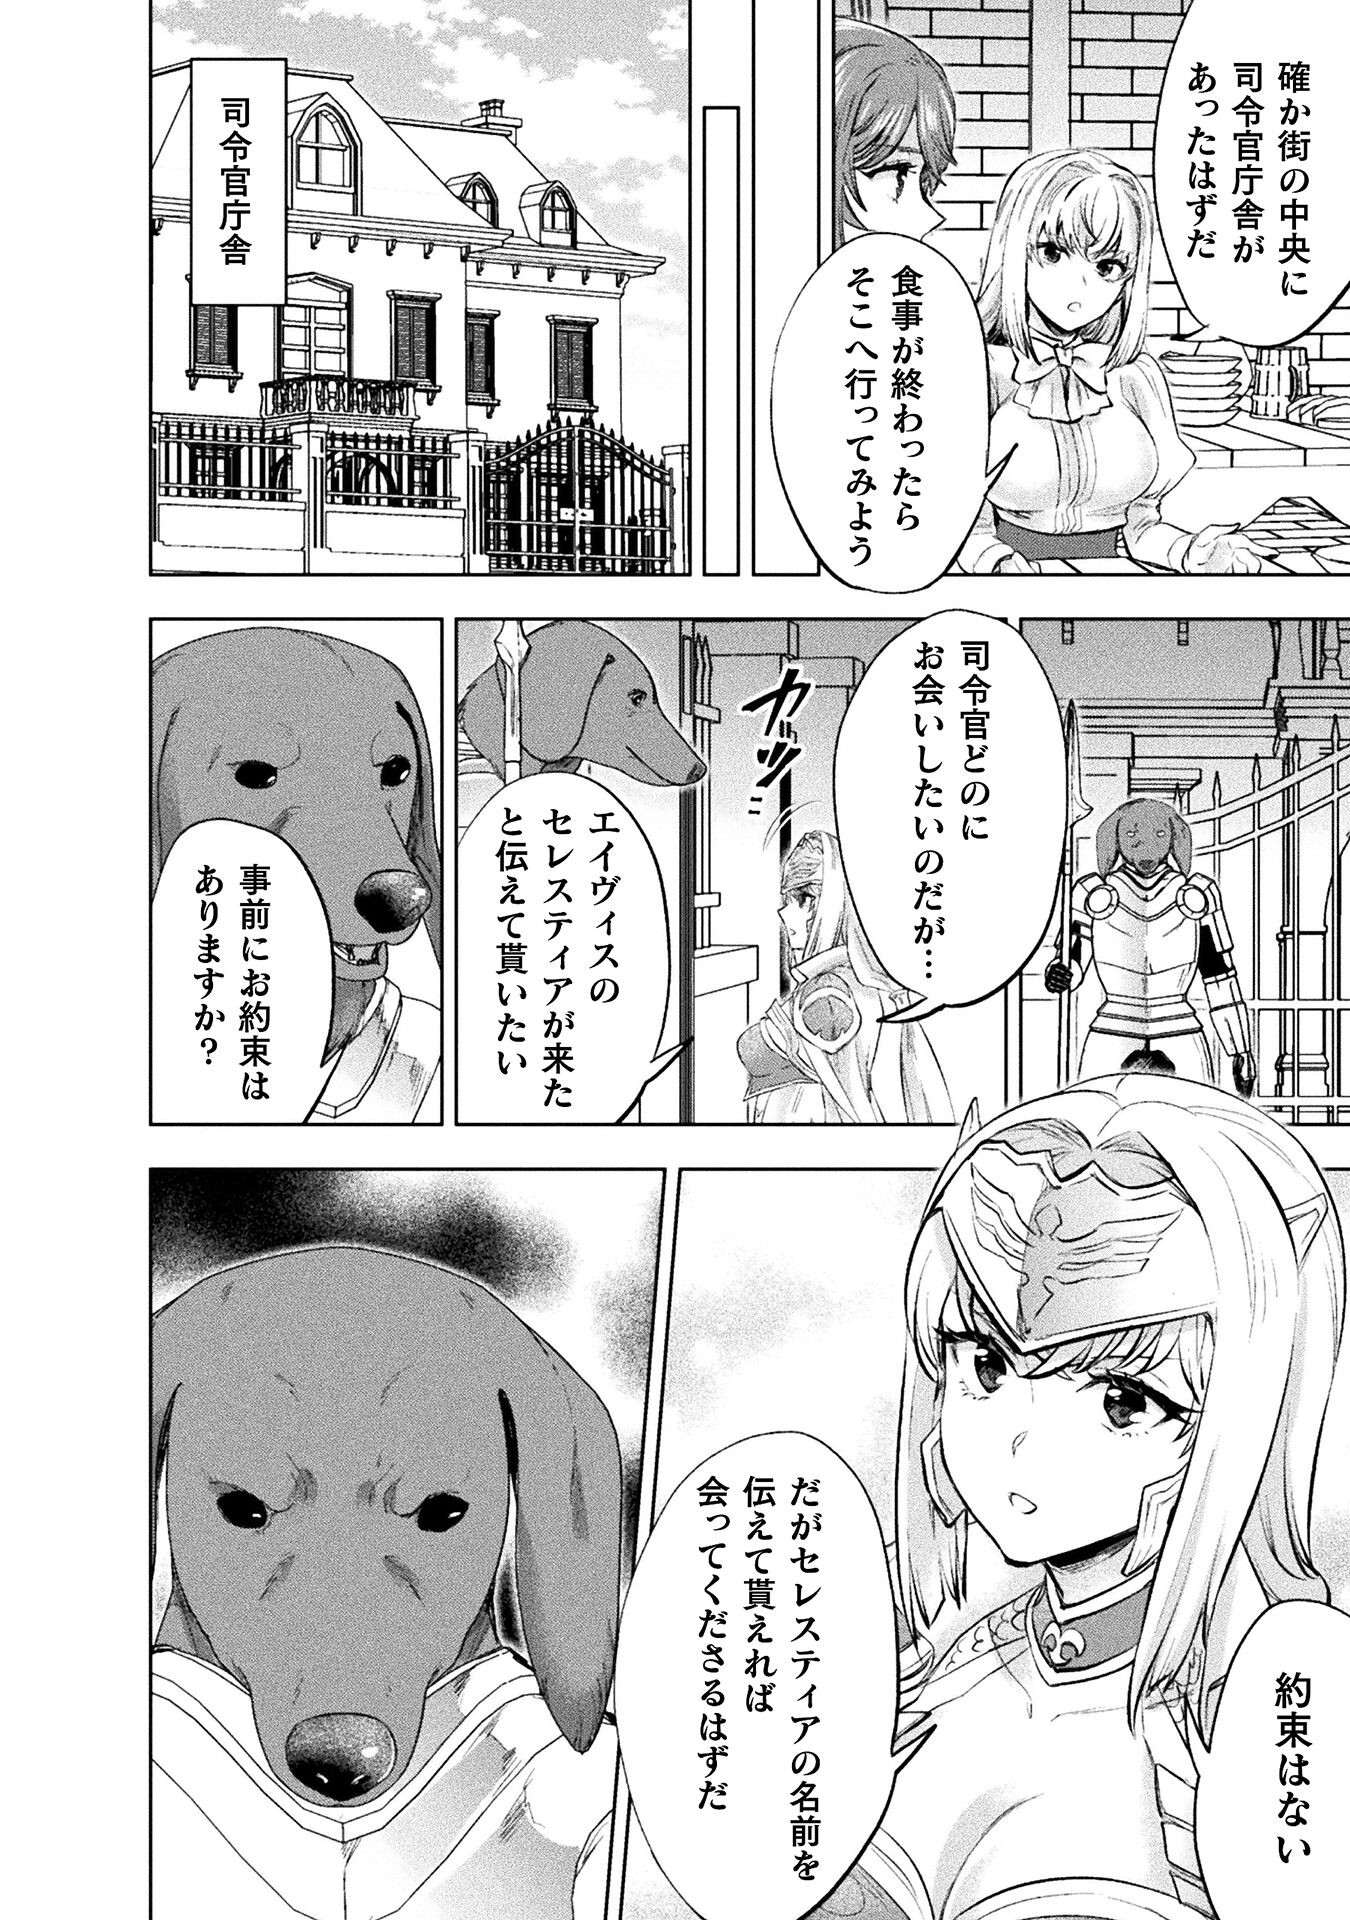 Bijo to Kenja to Majin no Ken - Chapter 31 - Page 16